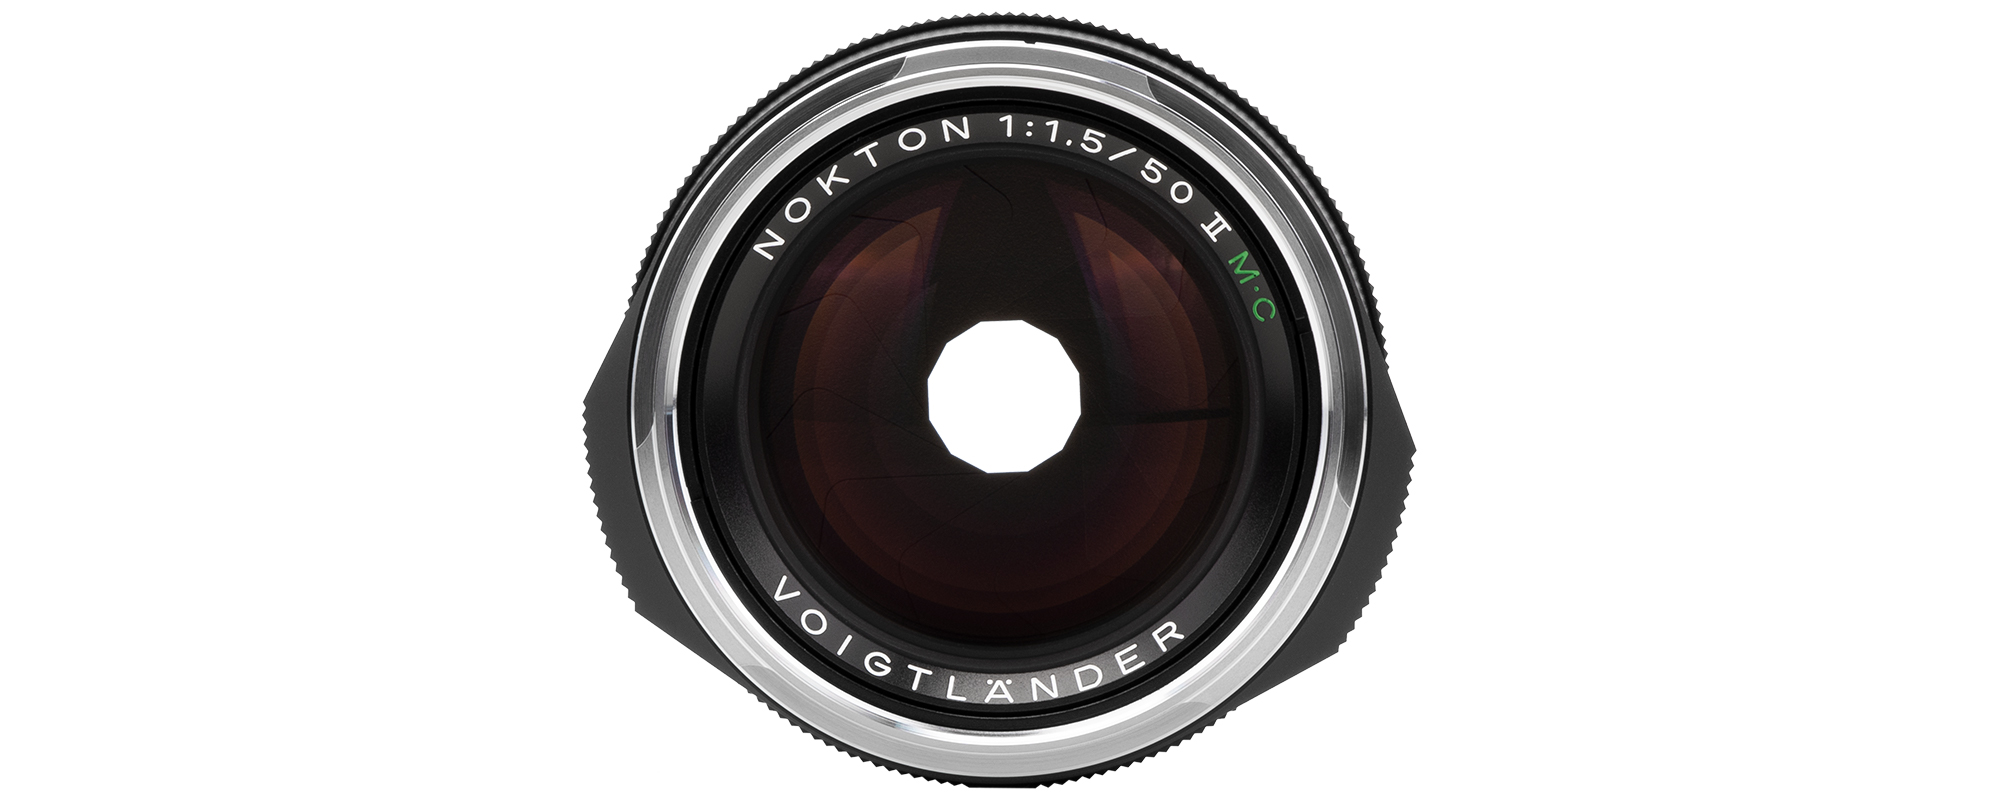 Obiektyw Voigtlander Nokton II 50 mm f/1,5 do Leica M - MC, czarny